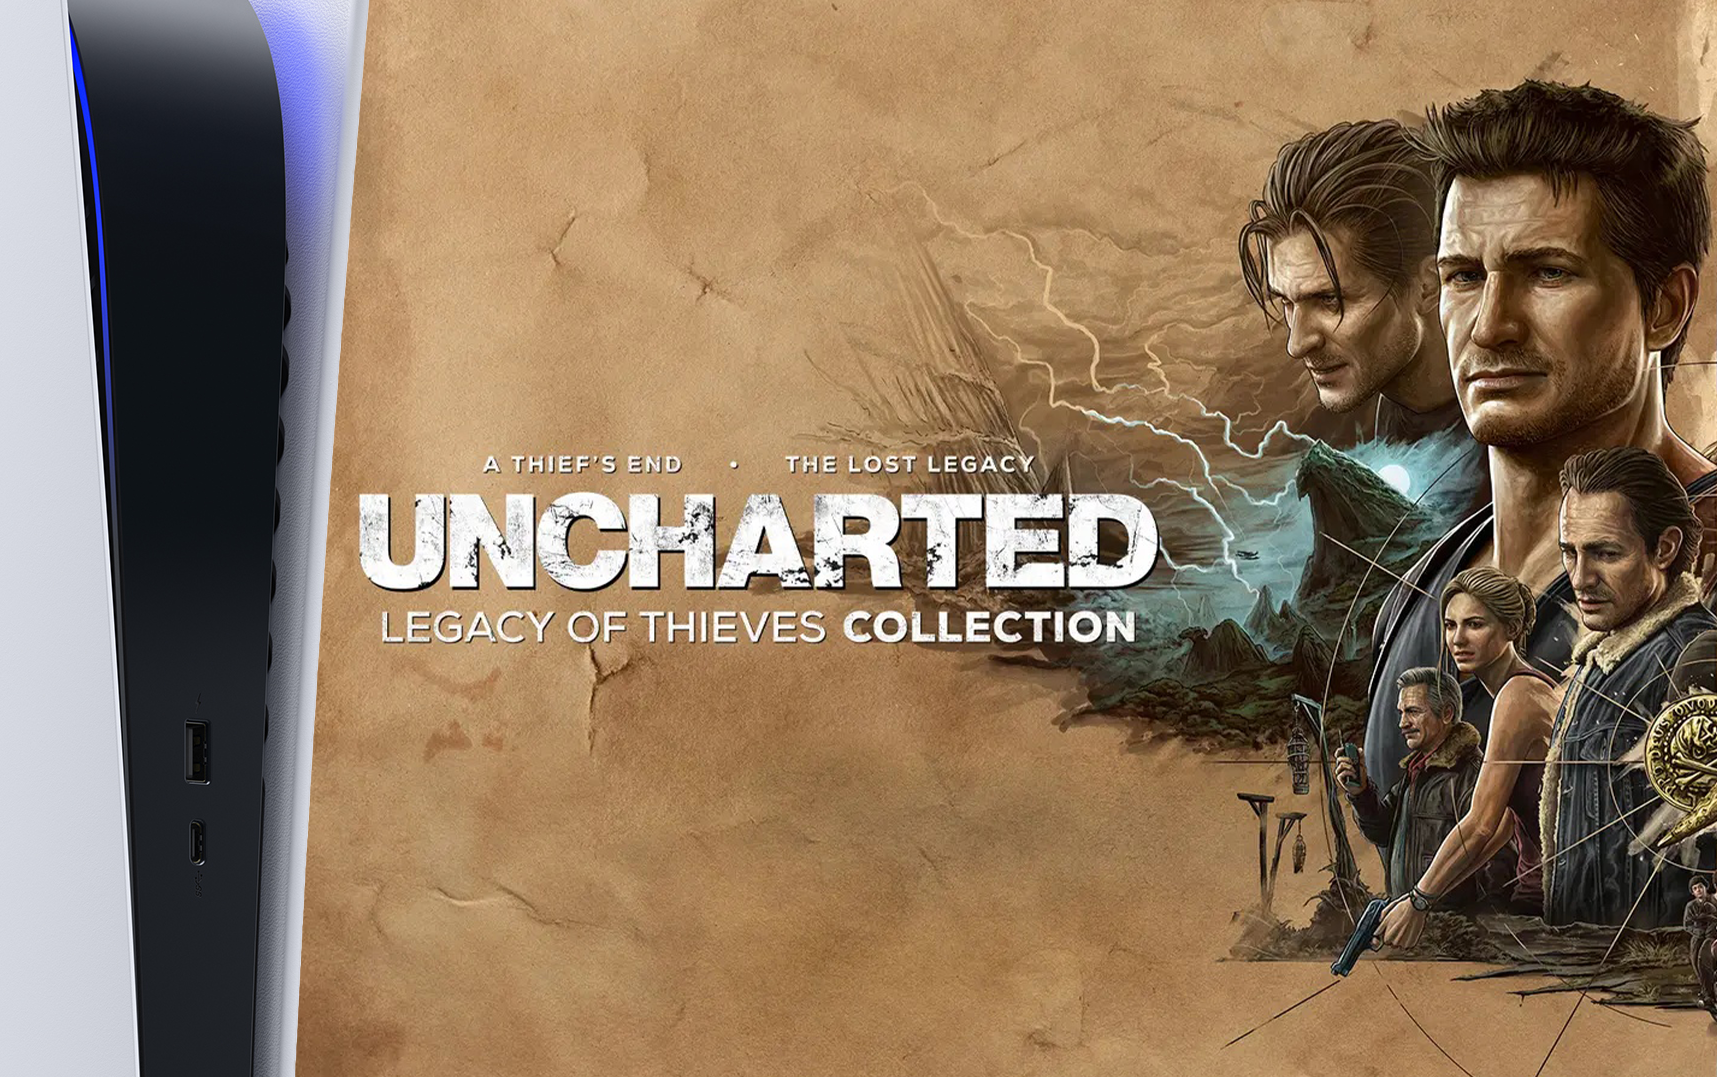 Uncharted legacy of thieves купить. Uncharted™: наследие воров. Коллекция. Uncharted 4 наследие воров. Игра Uncharted наследие воров. Uncharted 4 Legacy of Thieves collection.